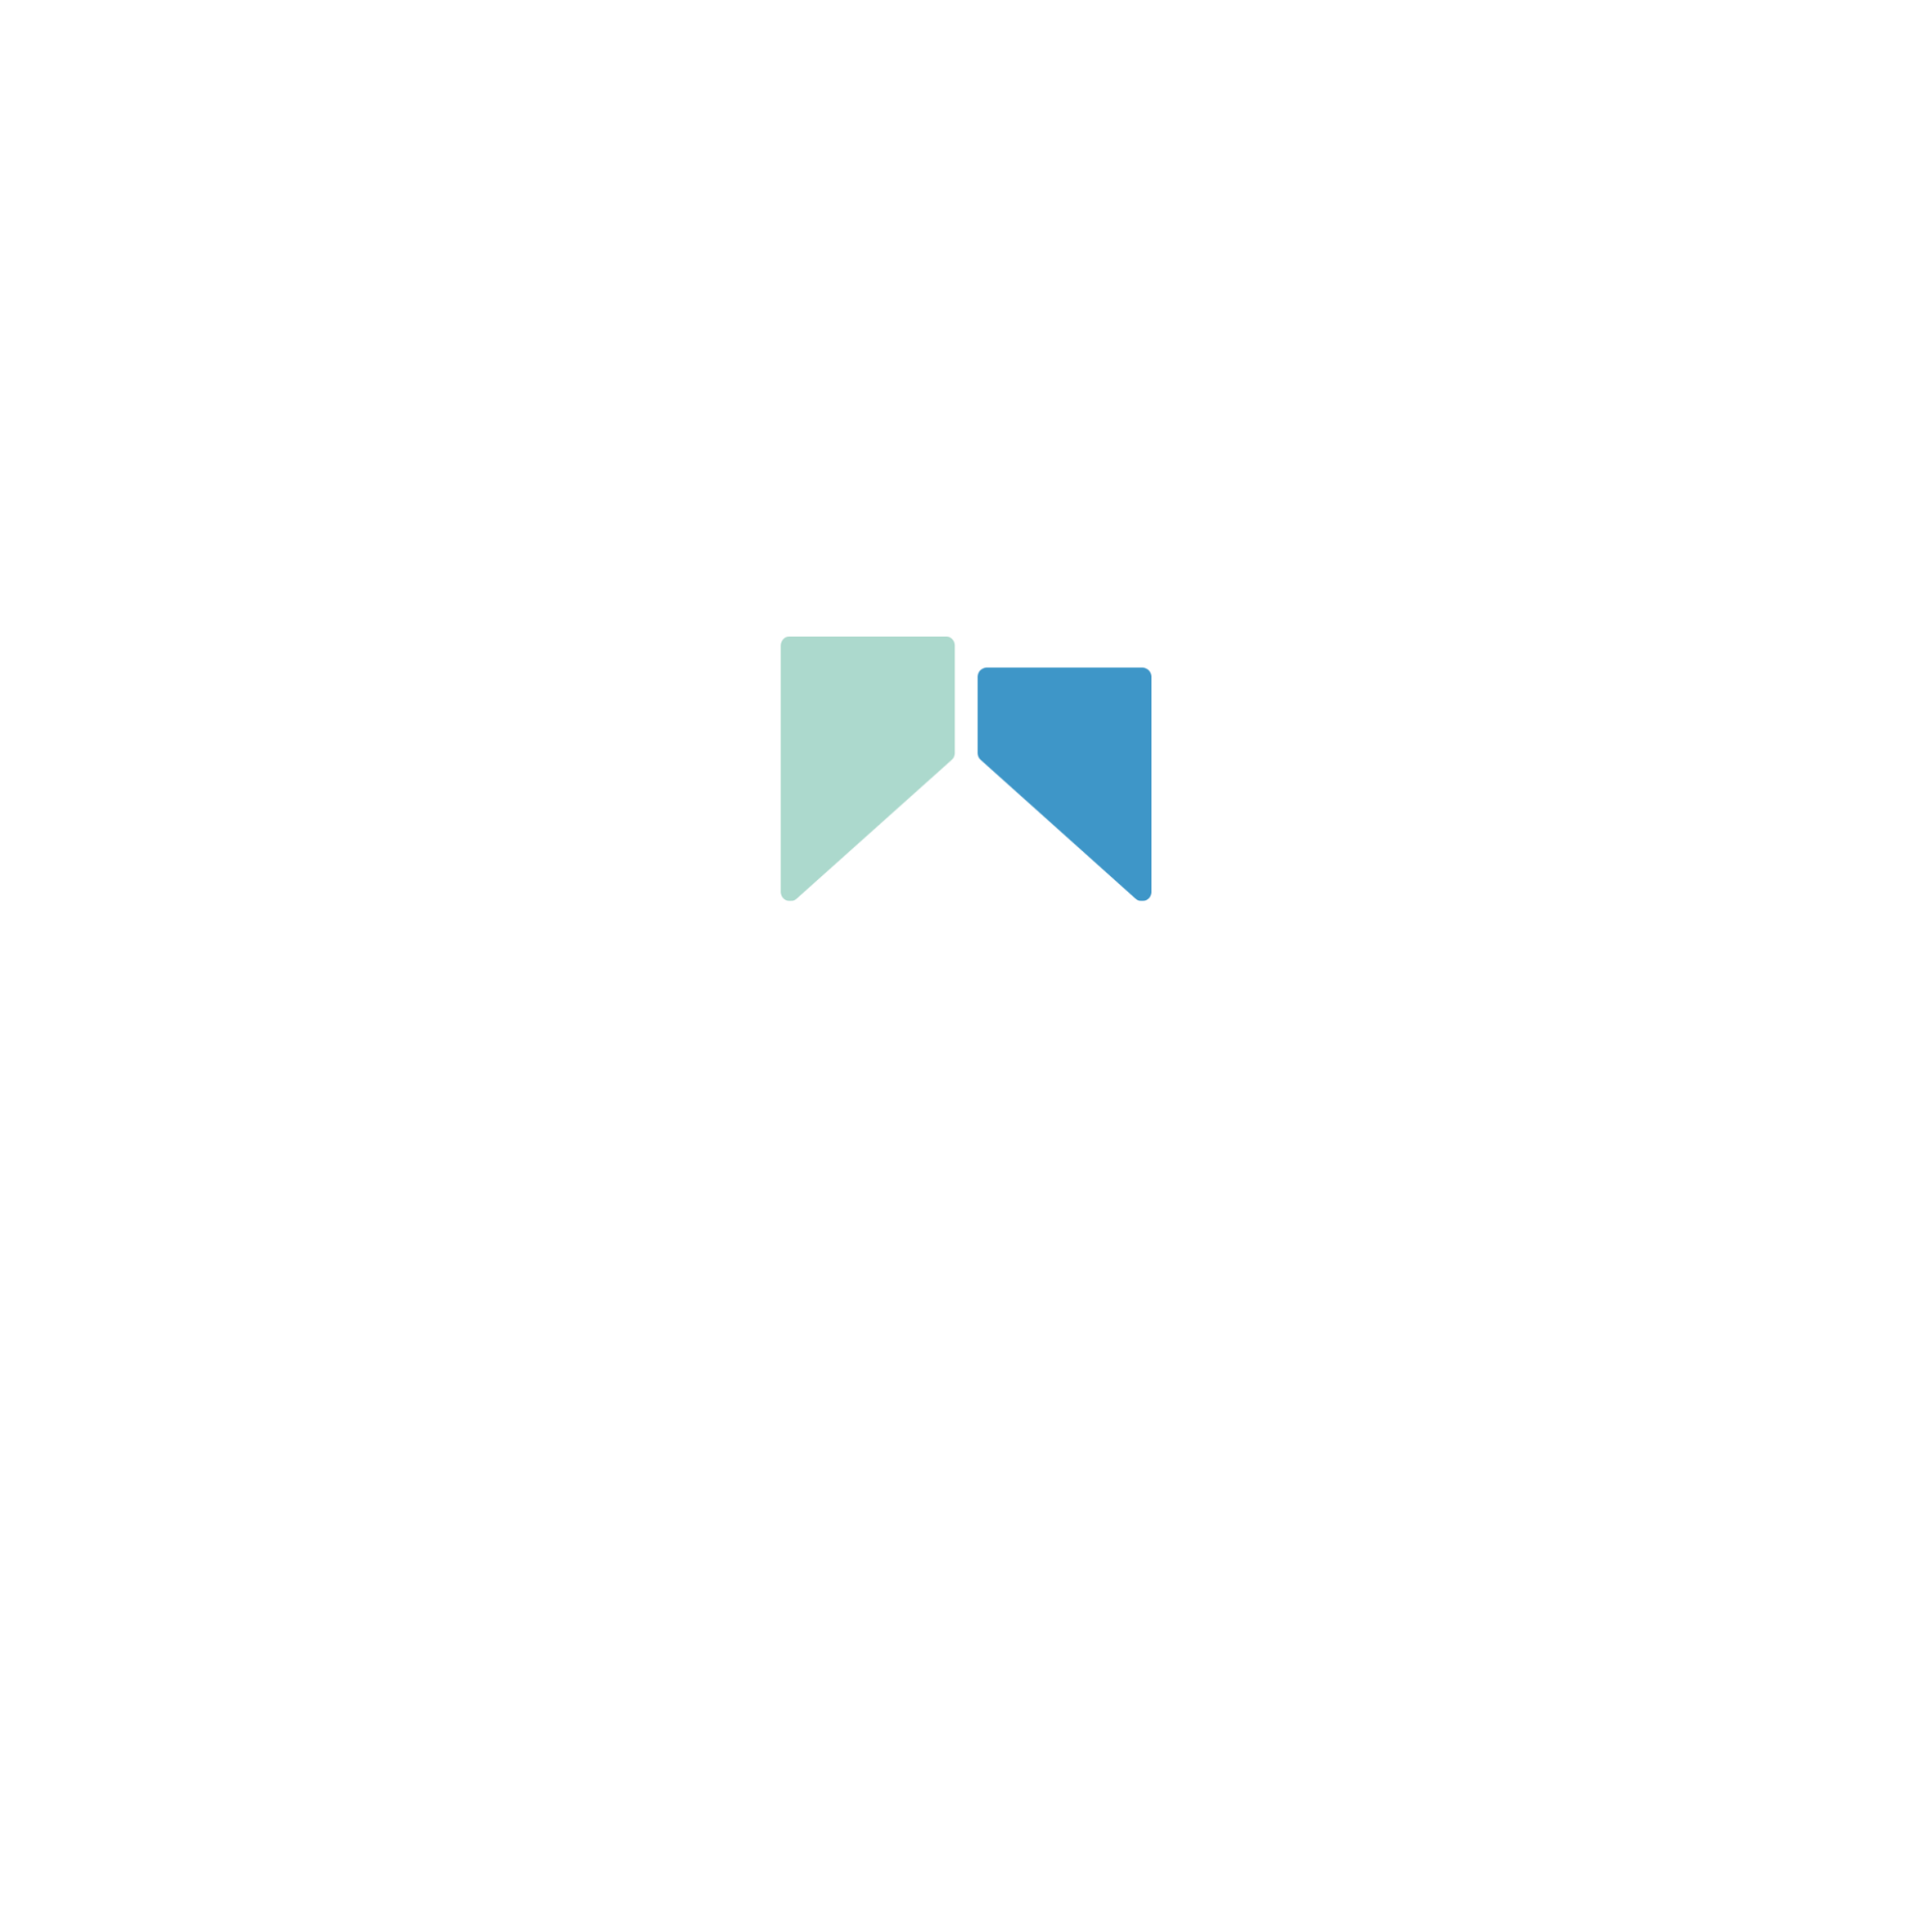 David & Jacques